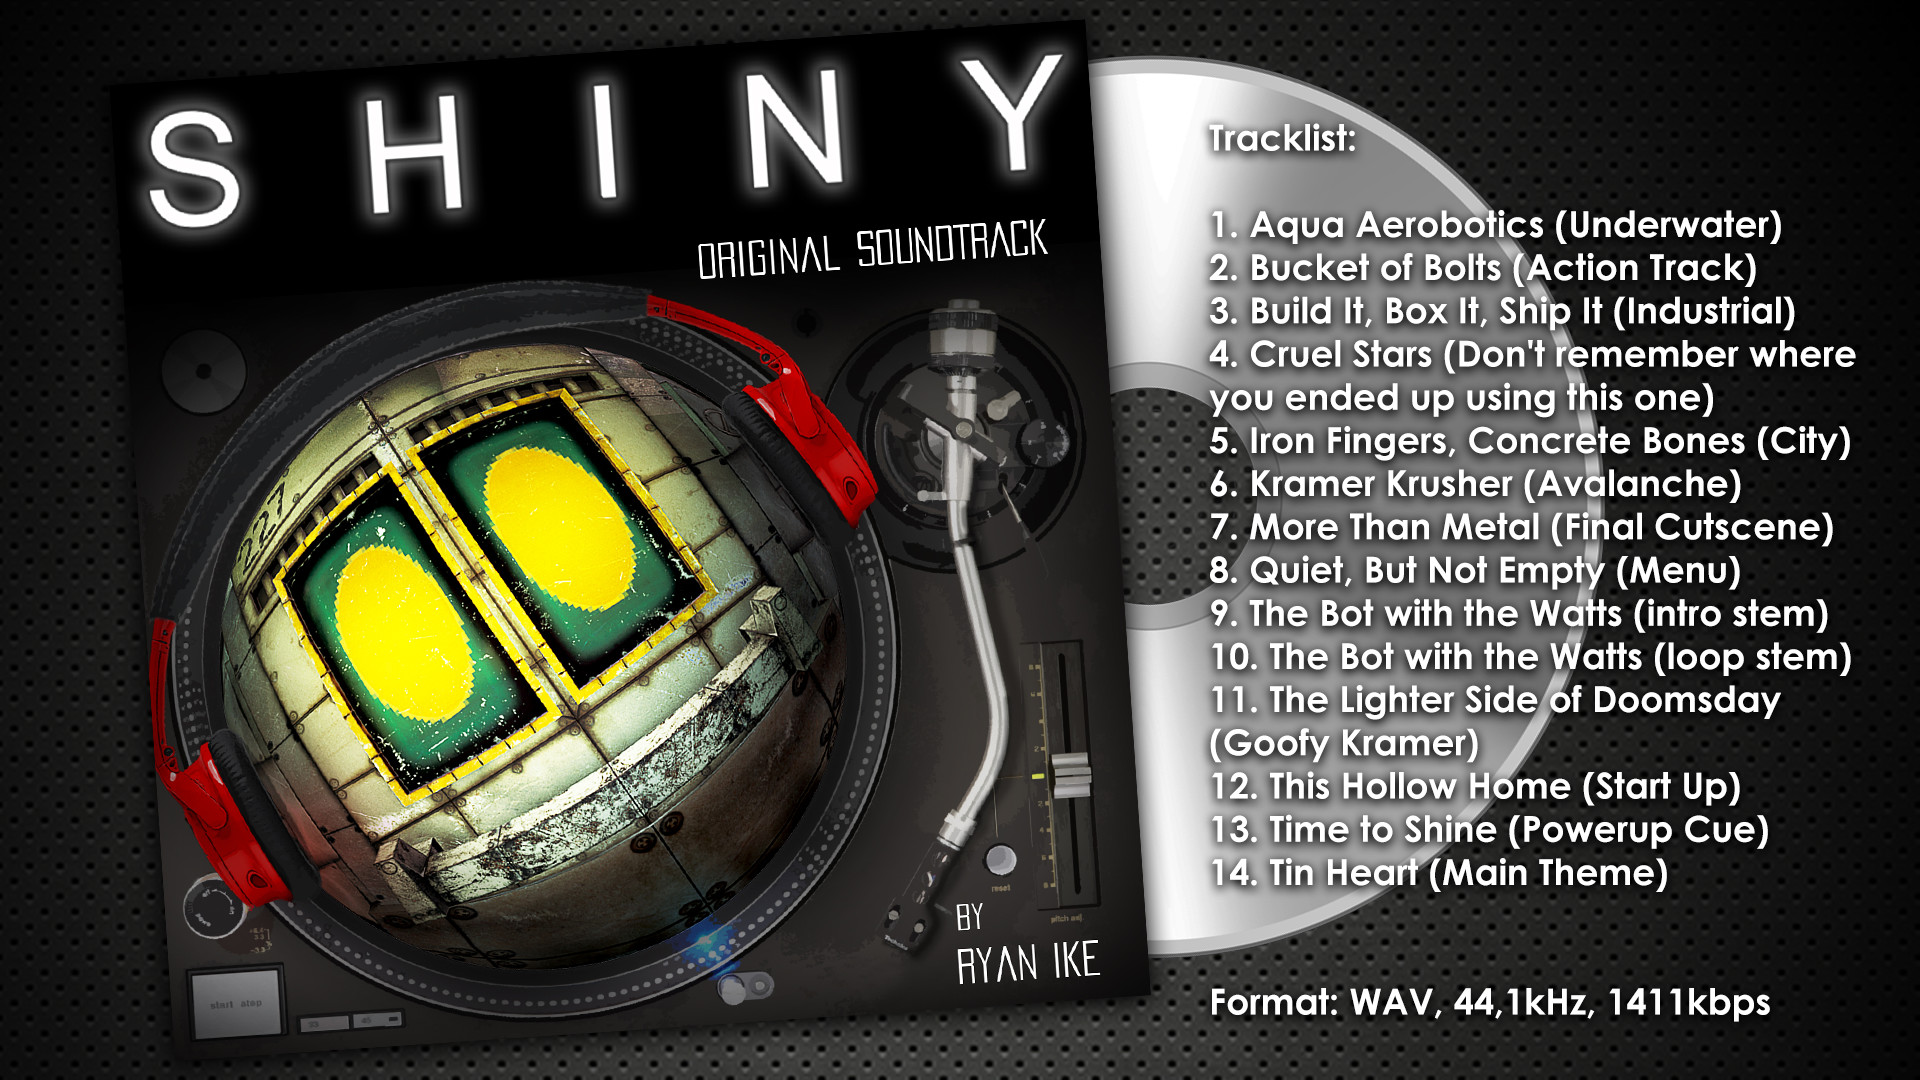 Shiny - Official Soundtrack DLC Steam CD Key 3.69 USD